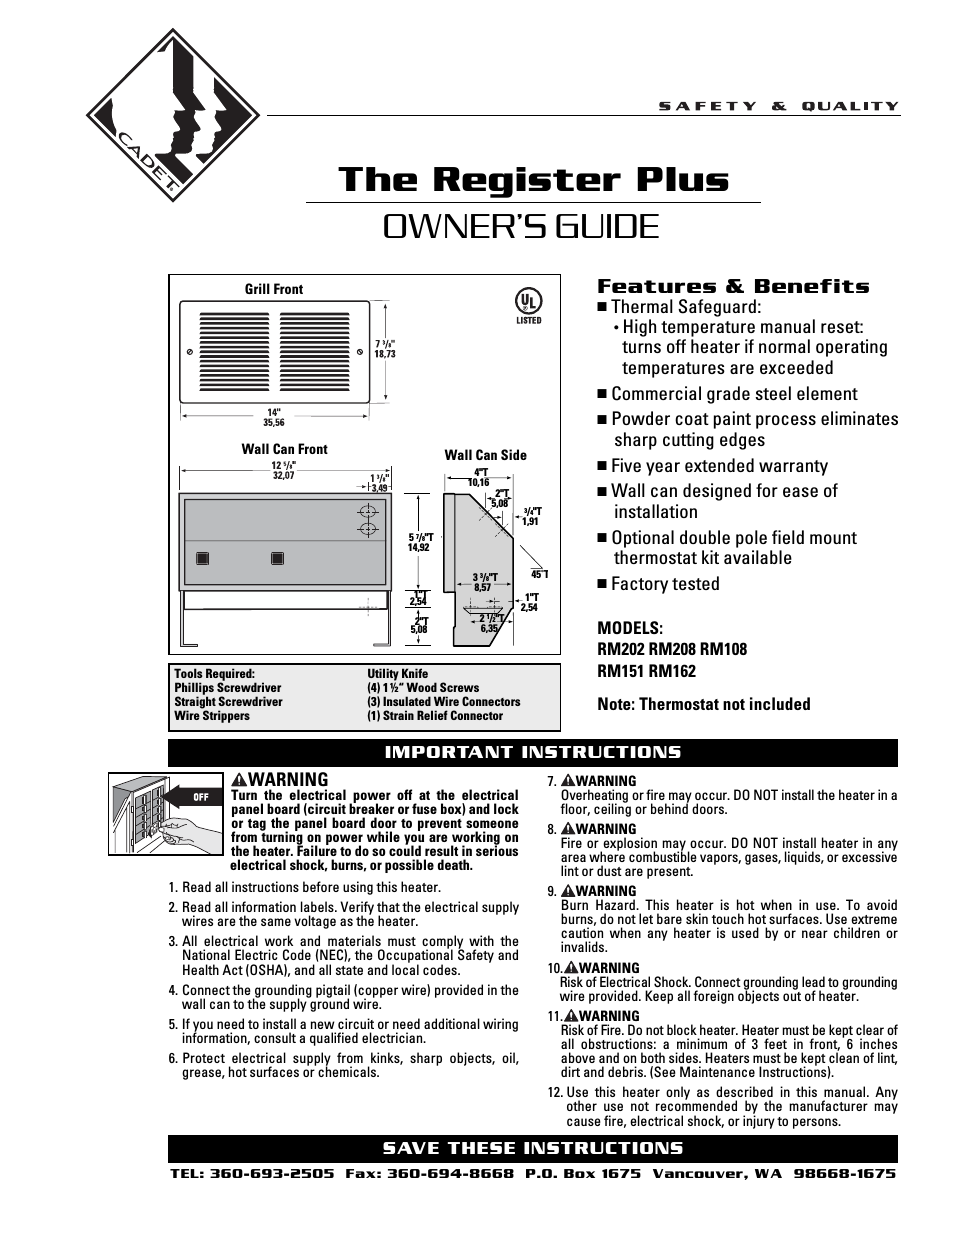 The Register Plus RM162